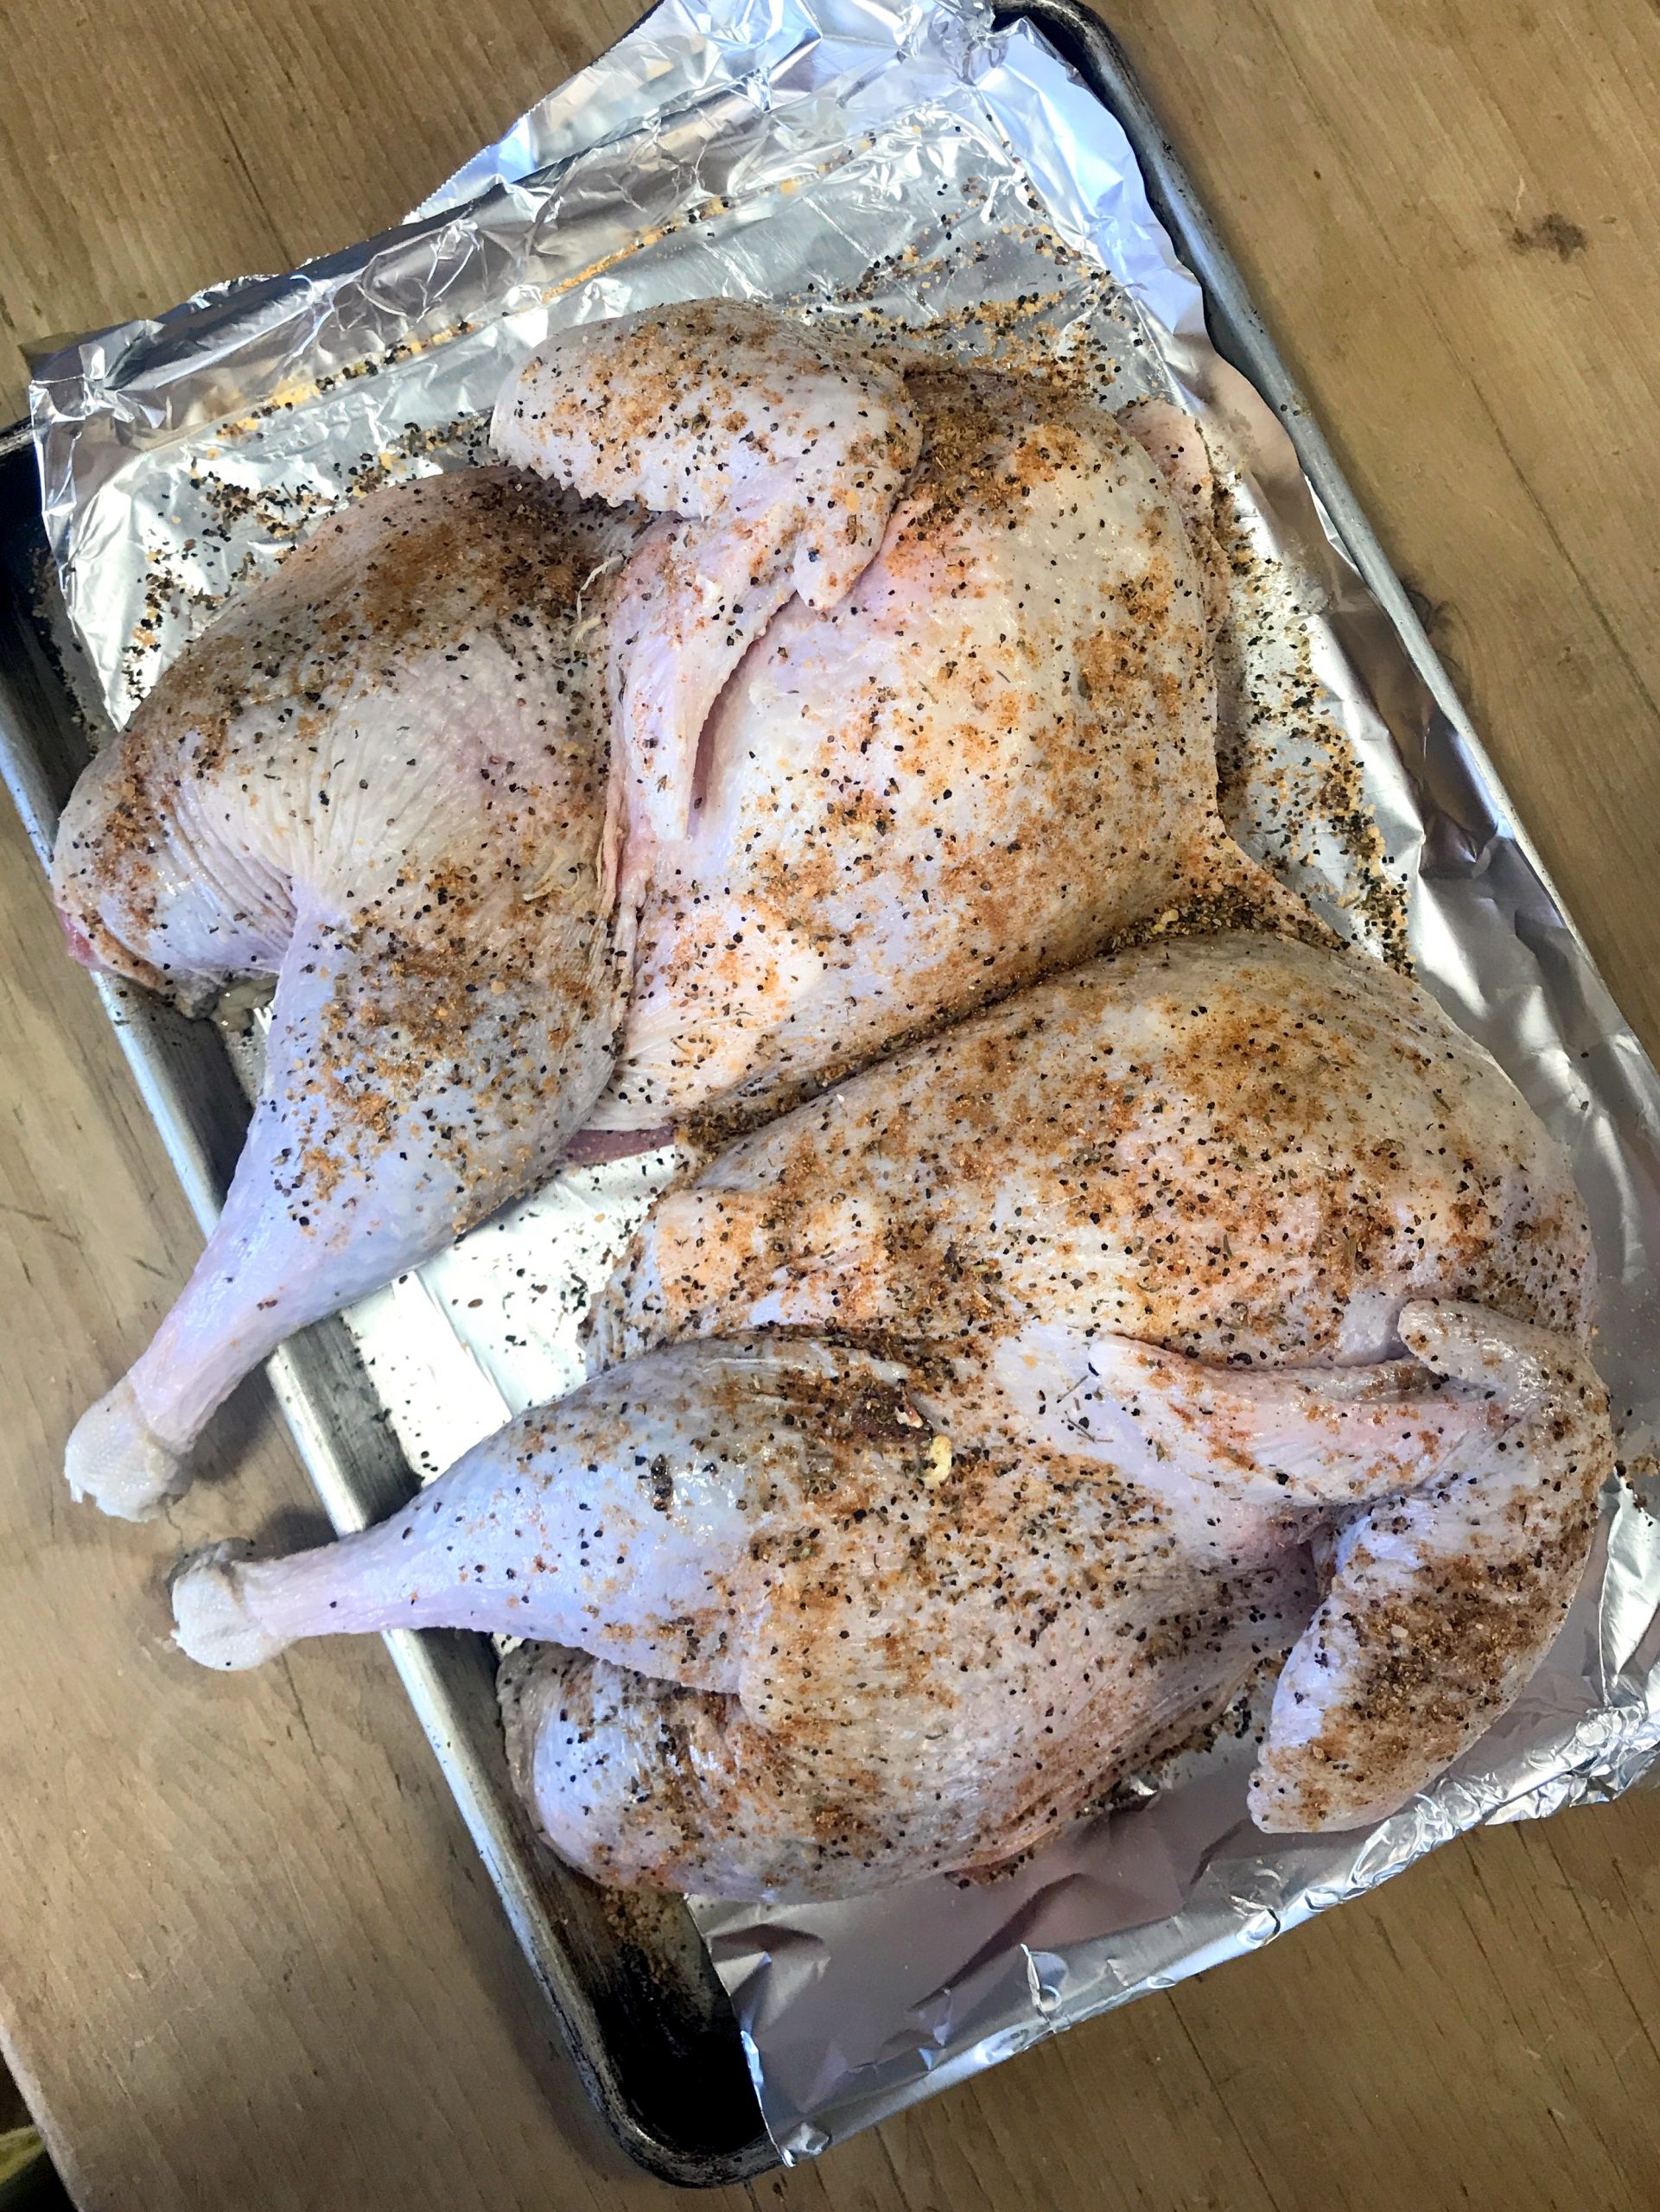 https://priscillamartel.com/wp-content/uploads/2020/11/Oven-BBQ-Roast-Turkey-applying-spices-skin-scaled.jpg